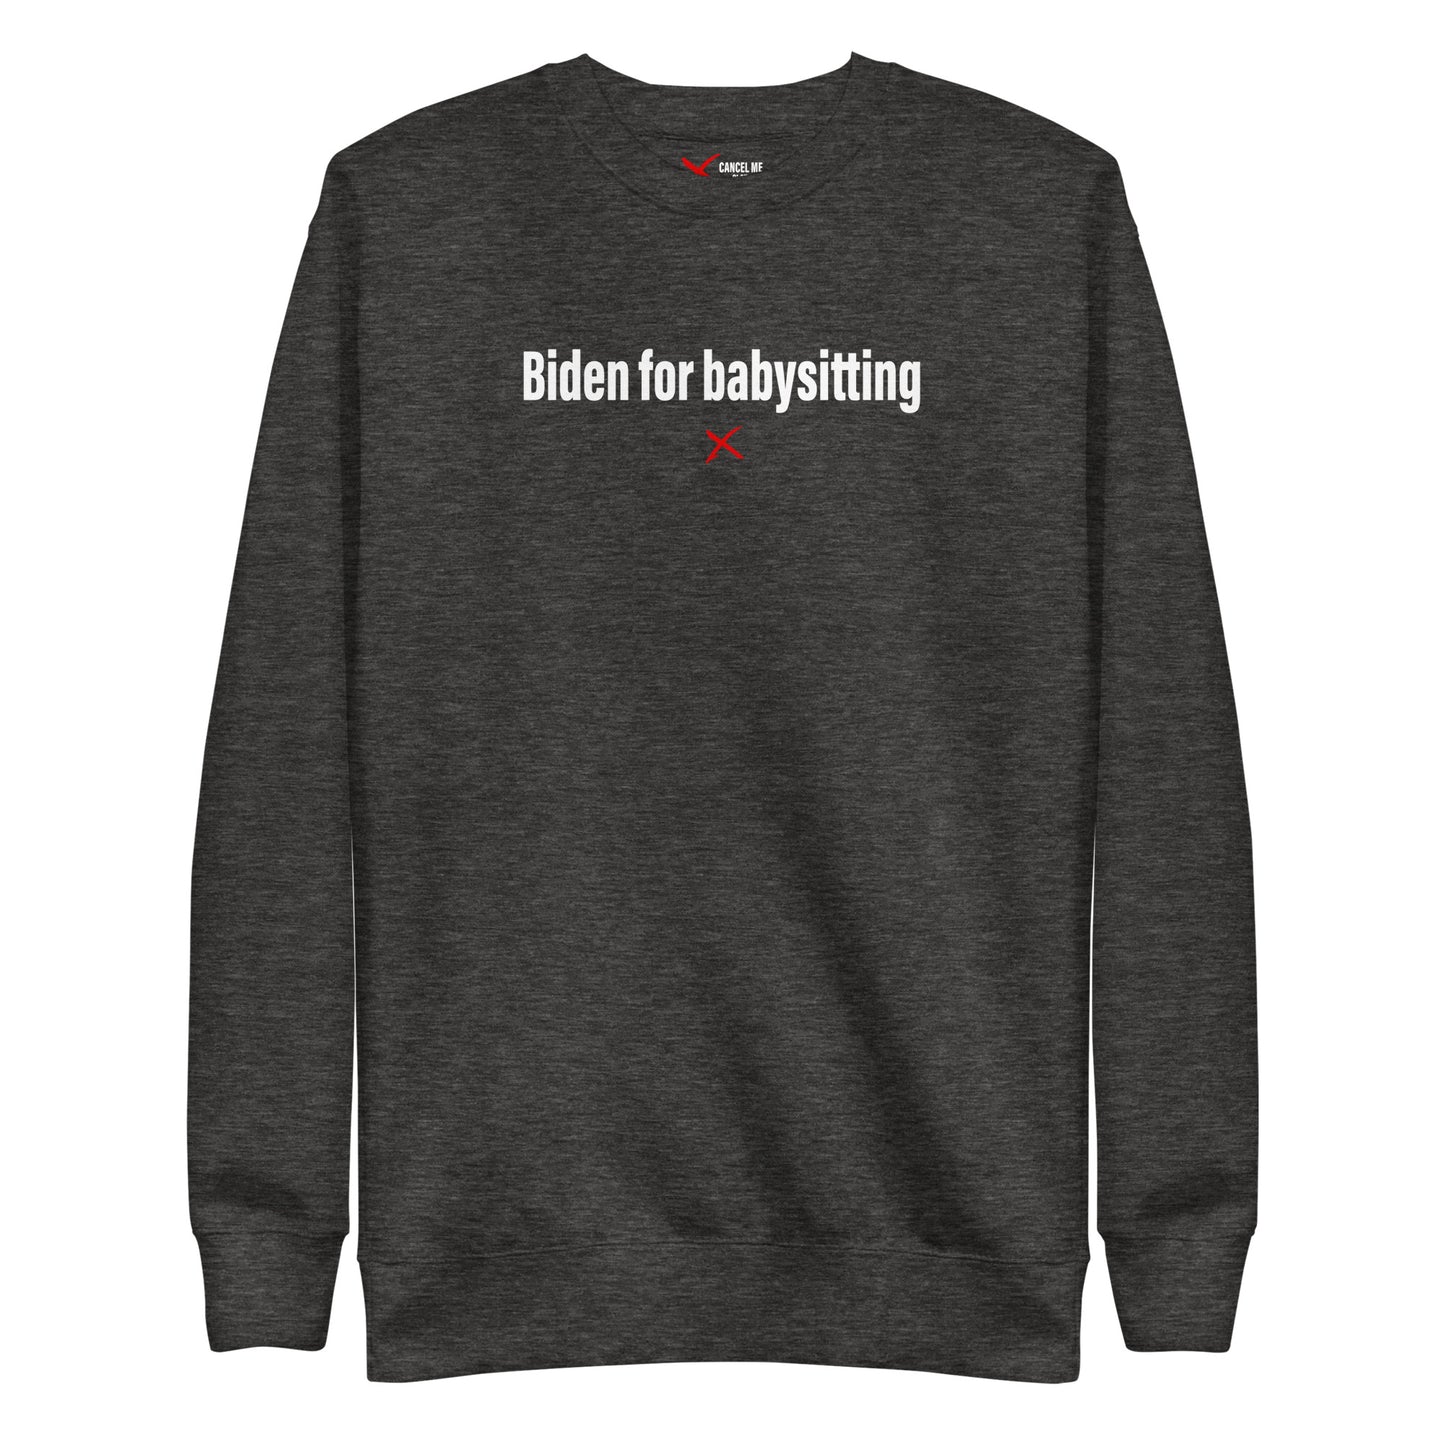 Biden for babysitting - Sweatshirt